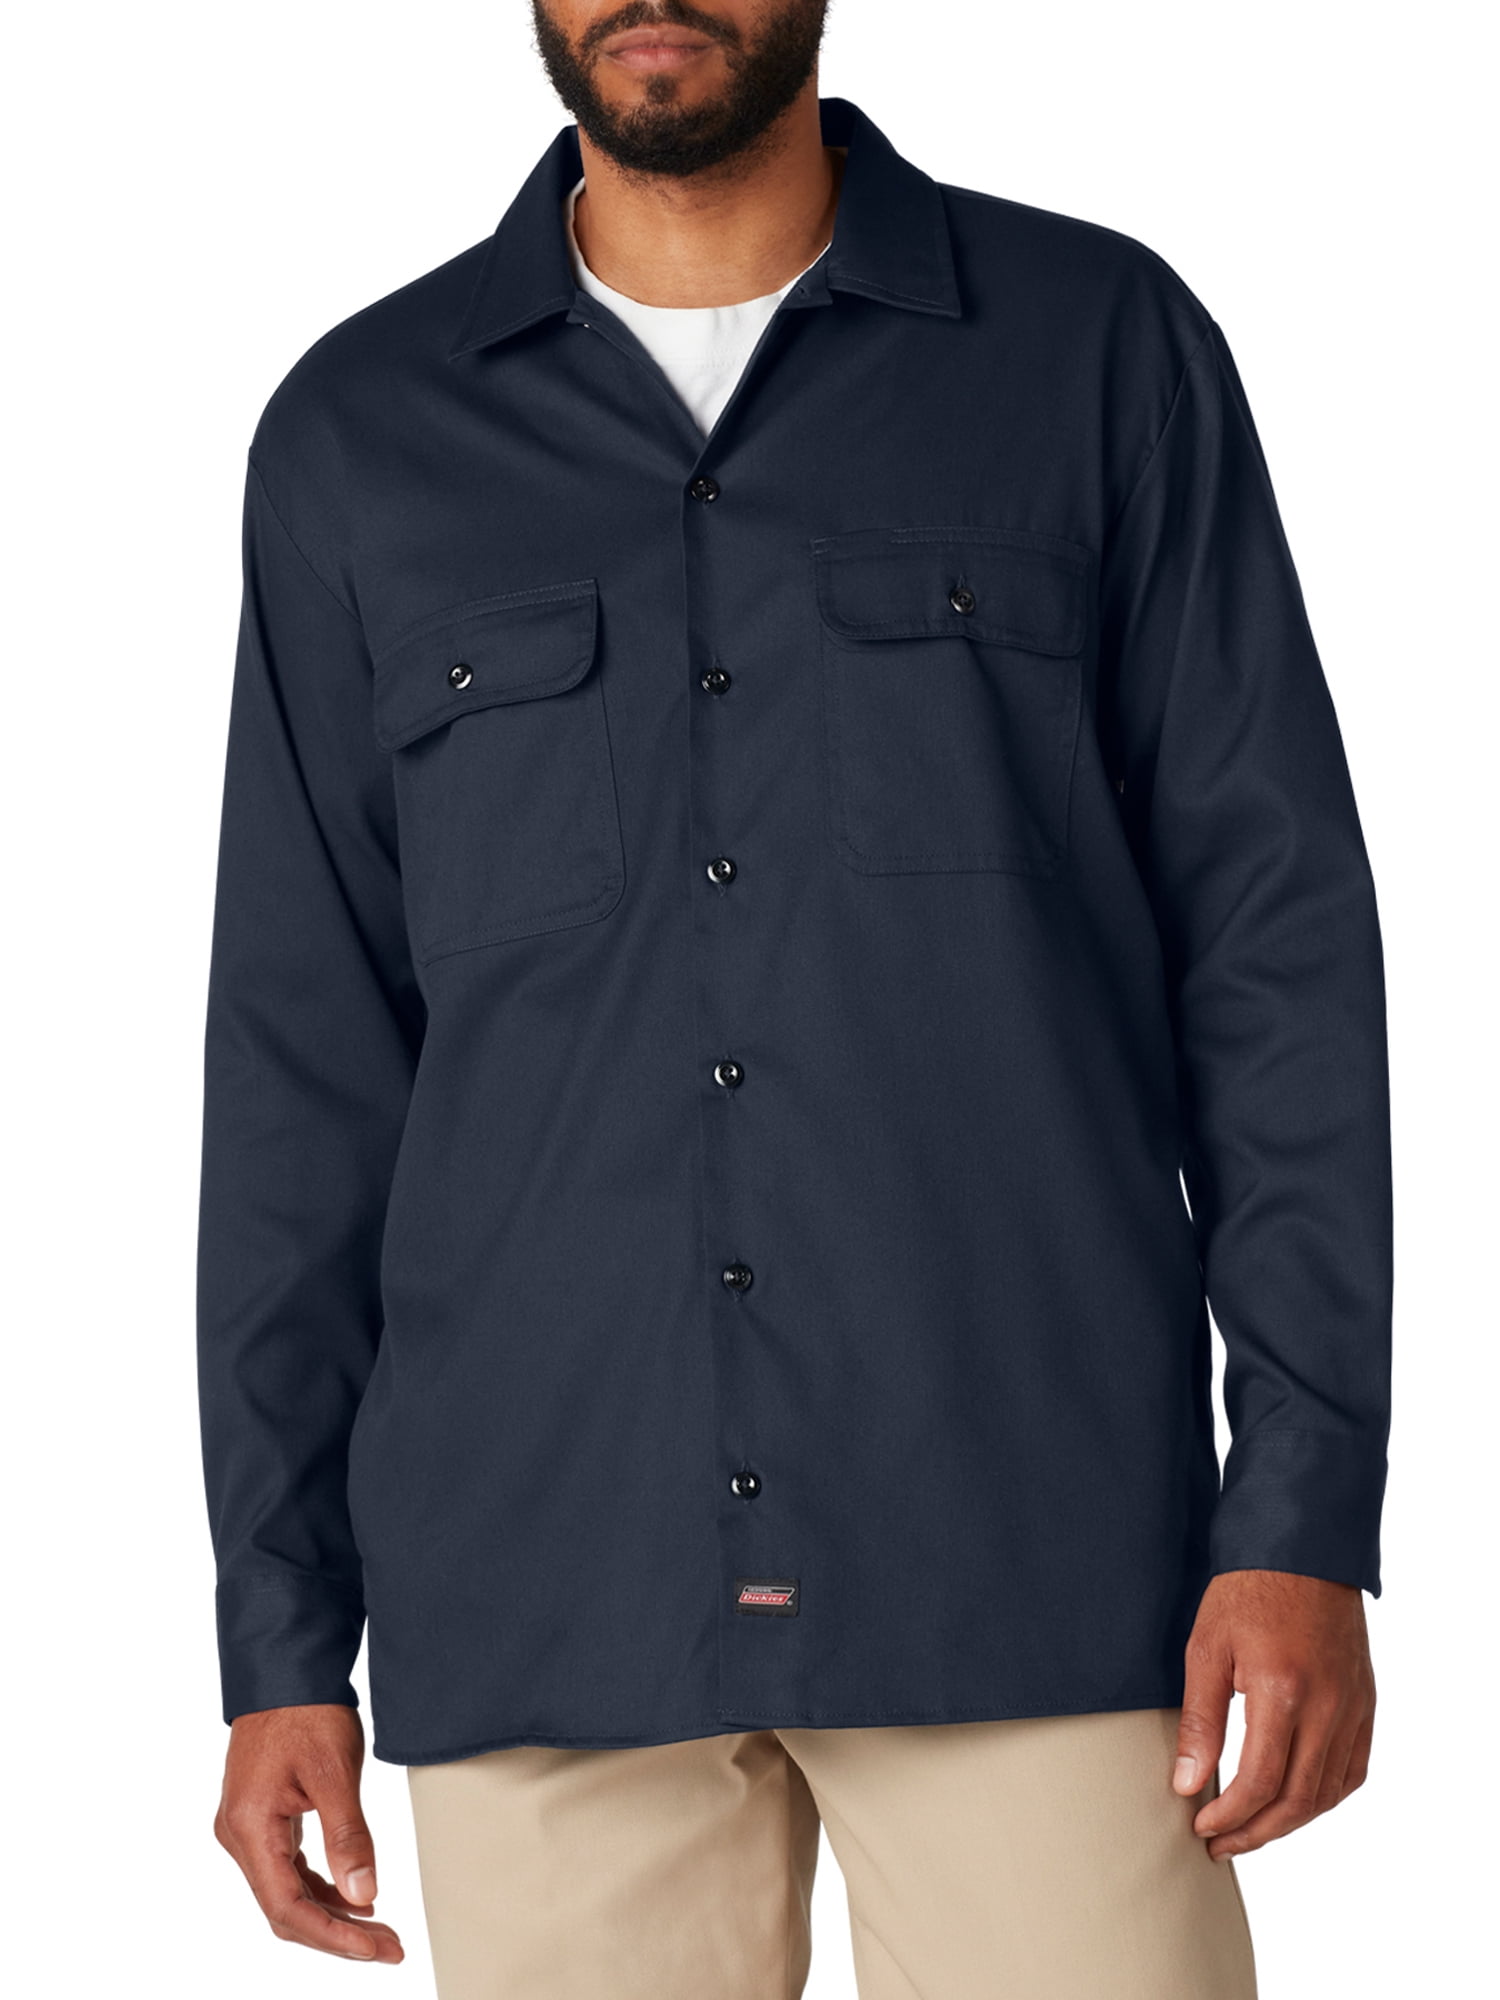 Ofre Fantasi rabat Genuine Dickies Men's FLEX Long Sleeve Work Shirt with Temp Control Cooling  - Walmart.com